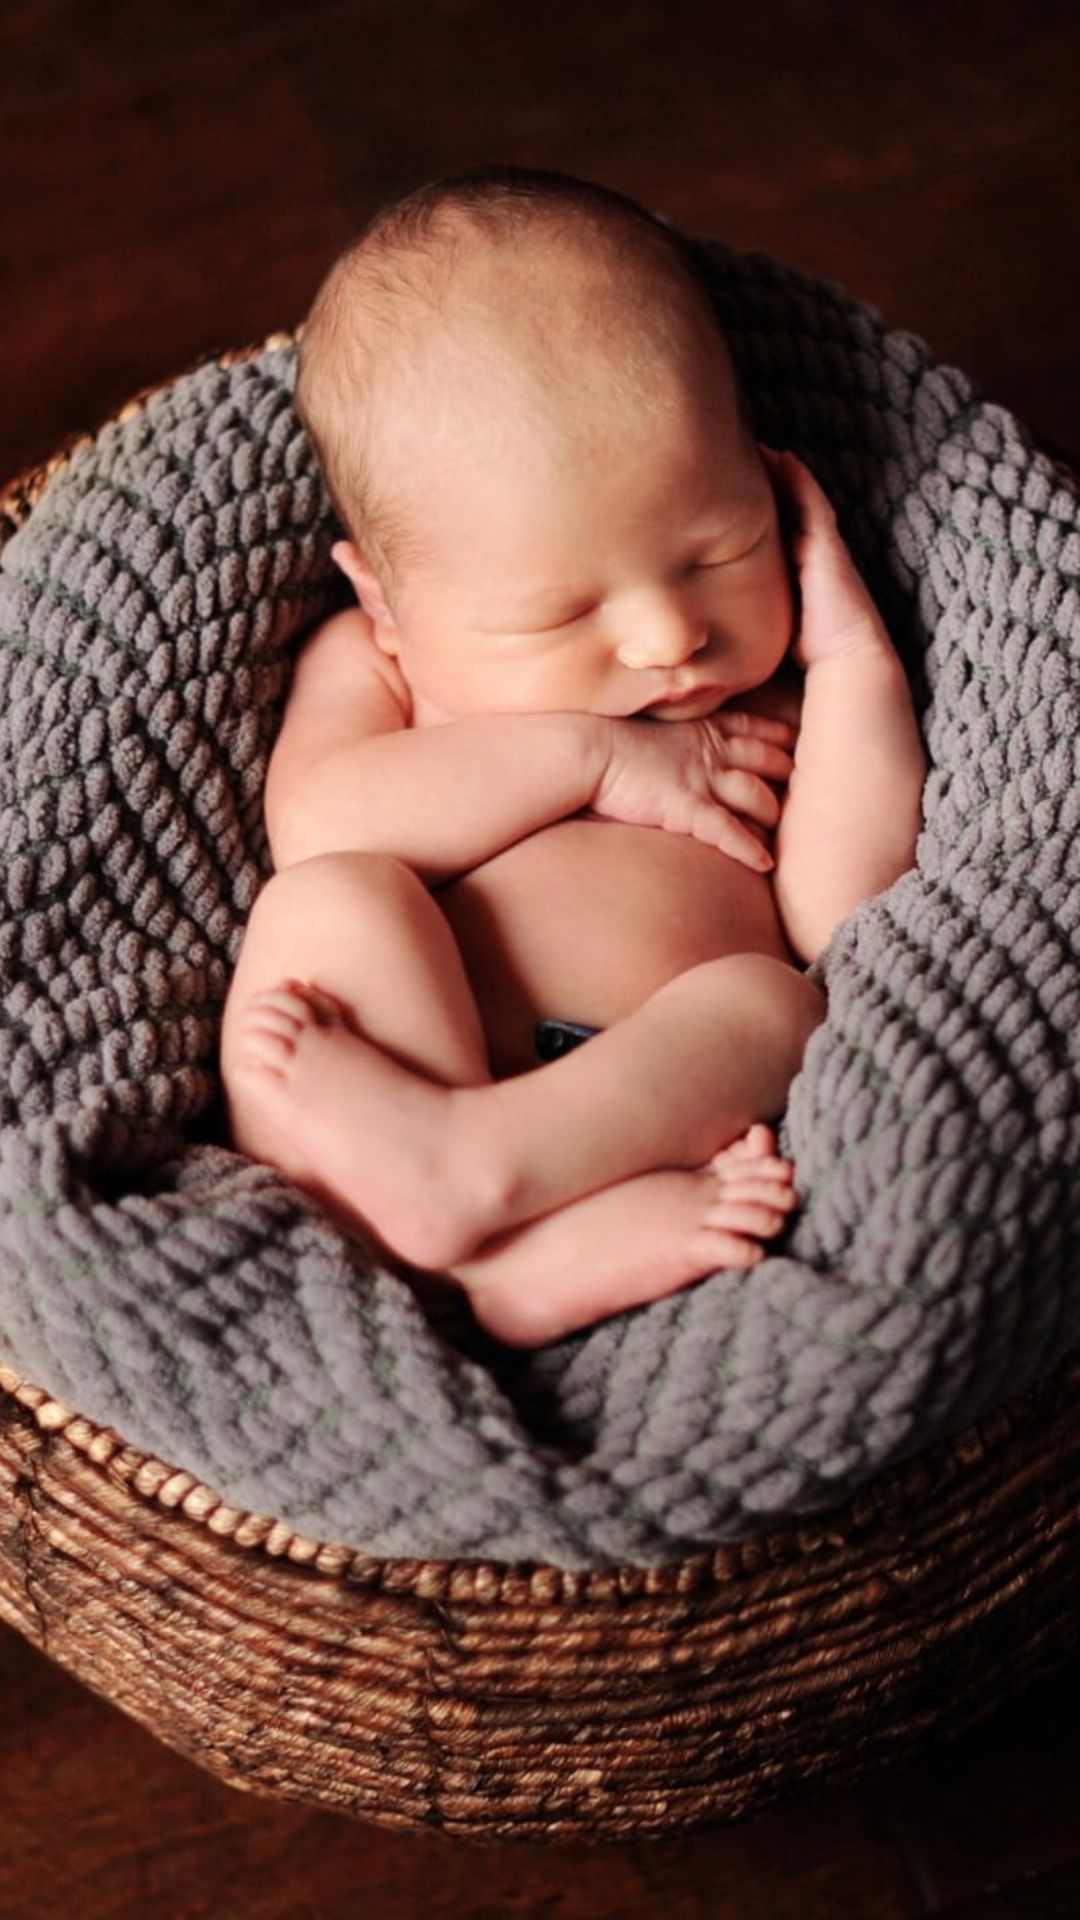 Cute Baby Wallpapers - Top 35 Best Cute Baby Wallpapers Download